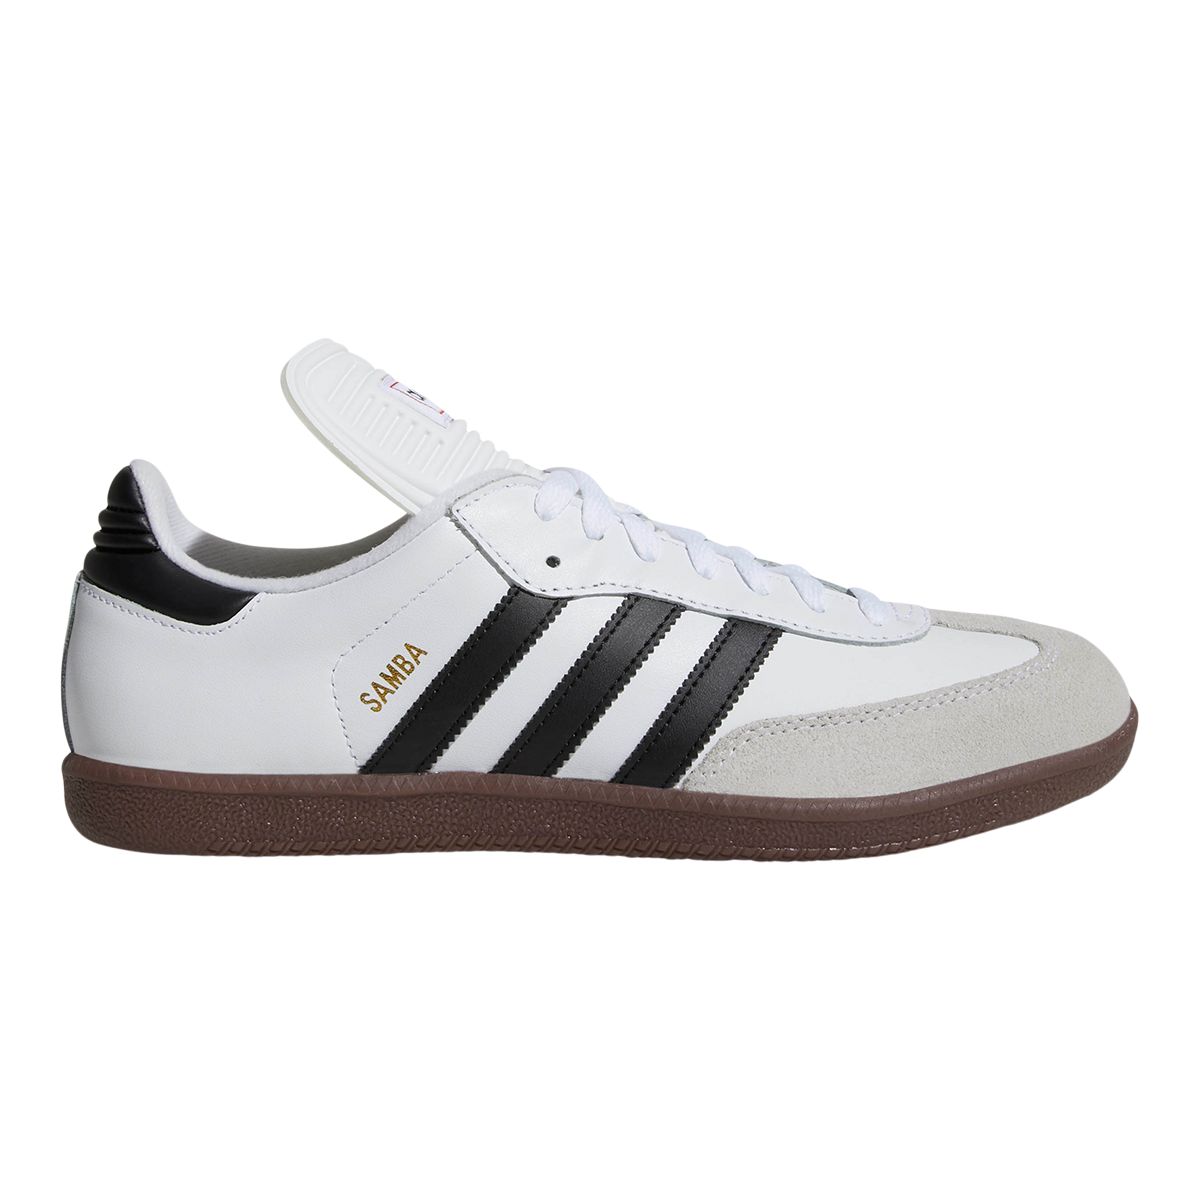 adidas Men's Originals Samba Shoes  Sneakers Soccer Leather